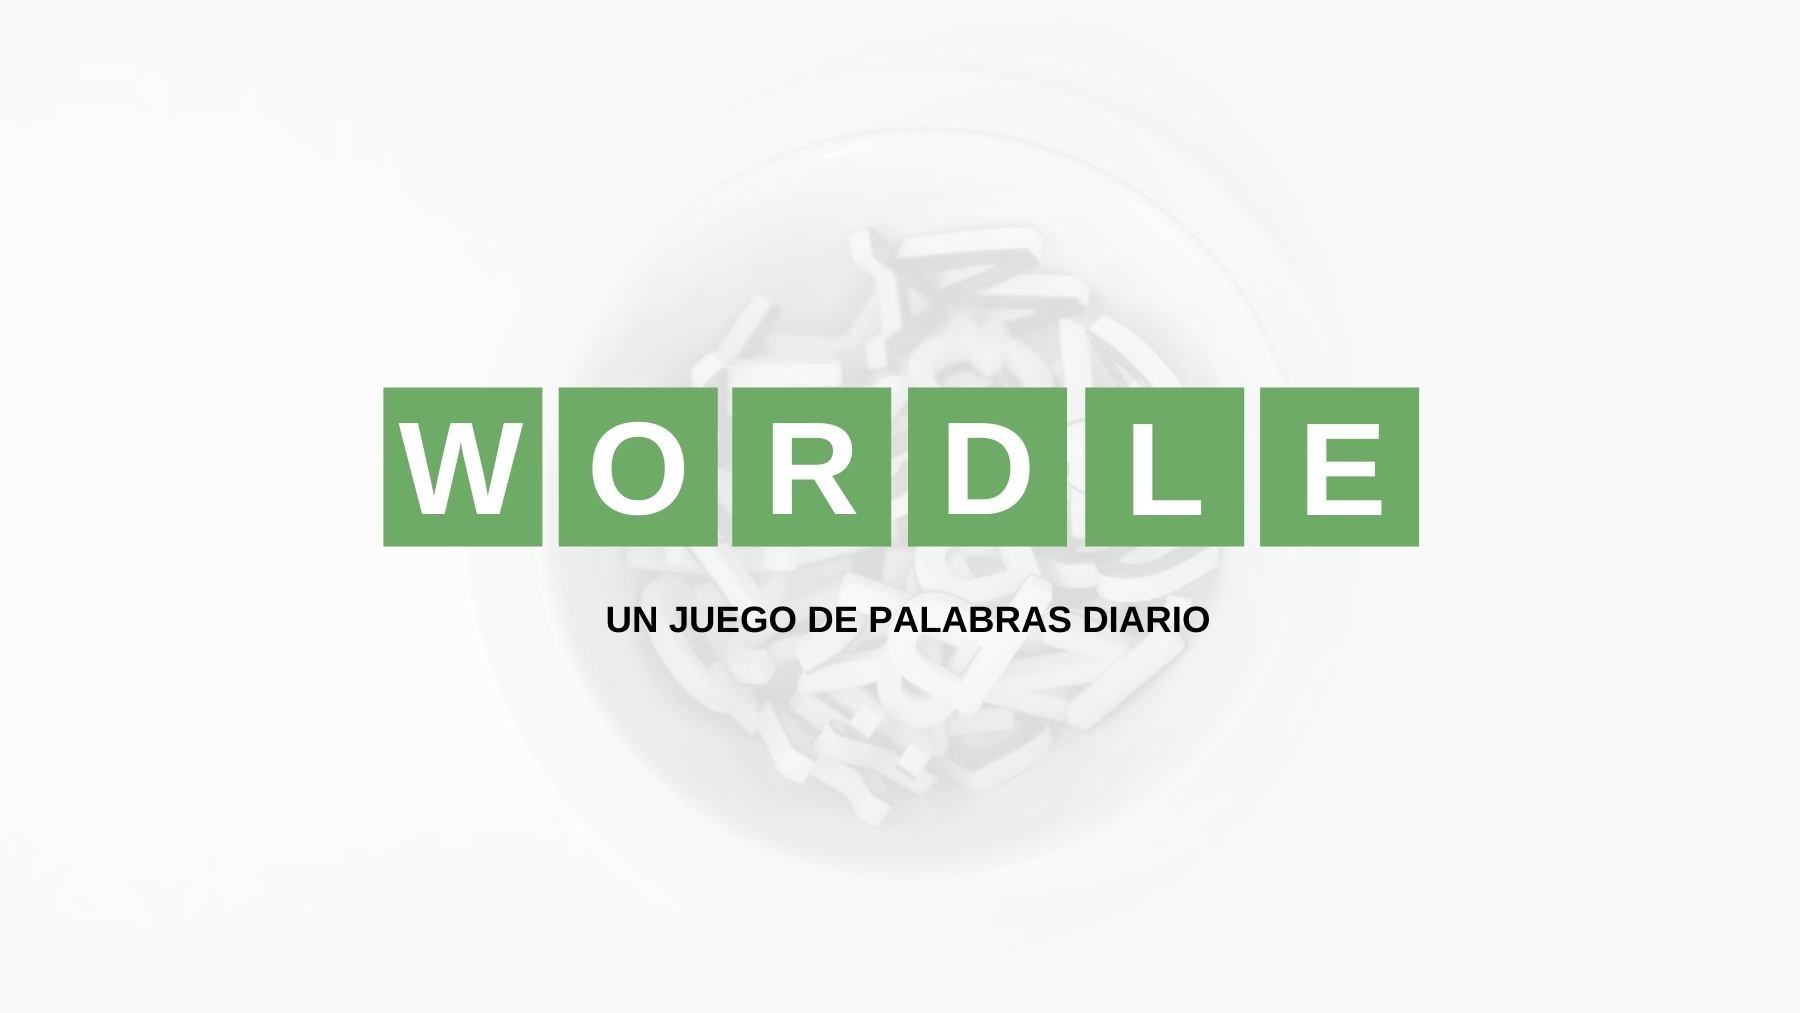 Wordle, solución palabra Wordle hoy